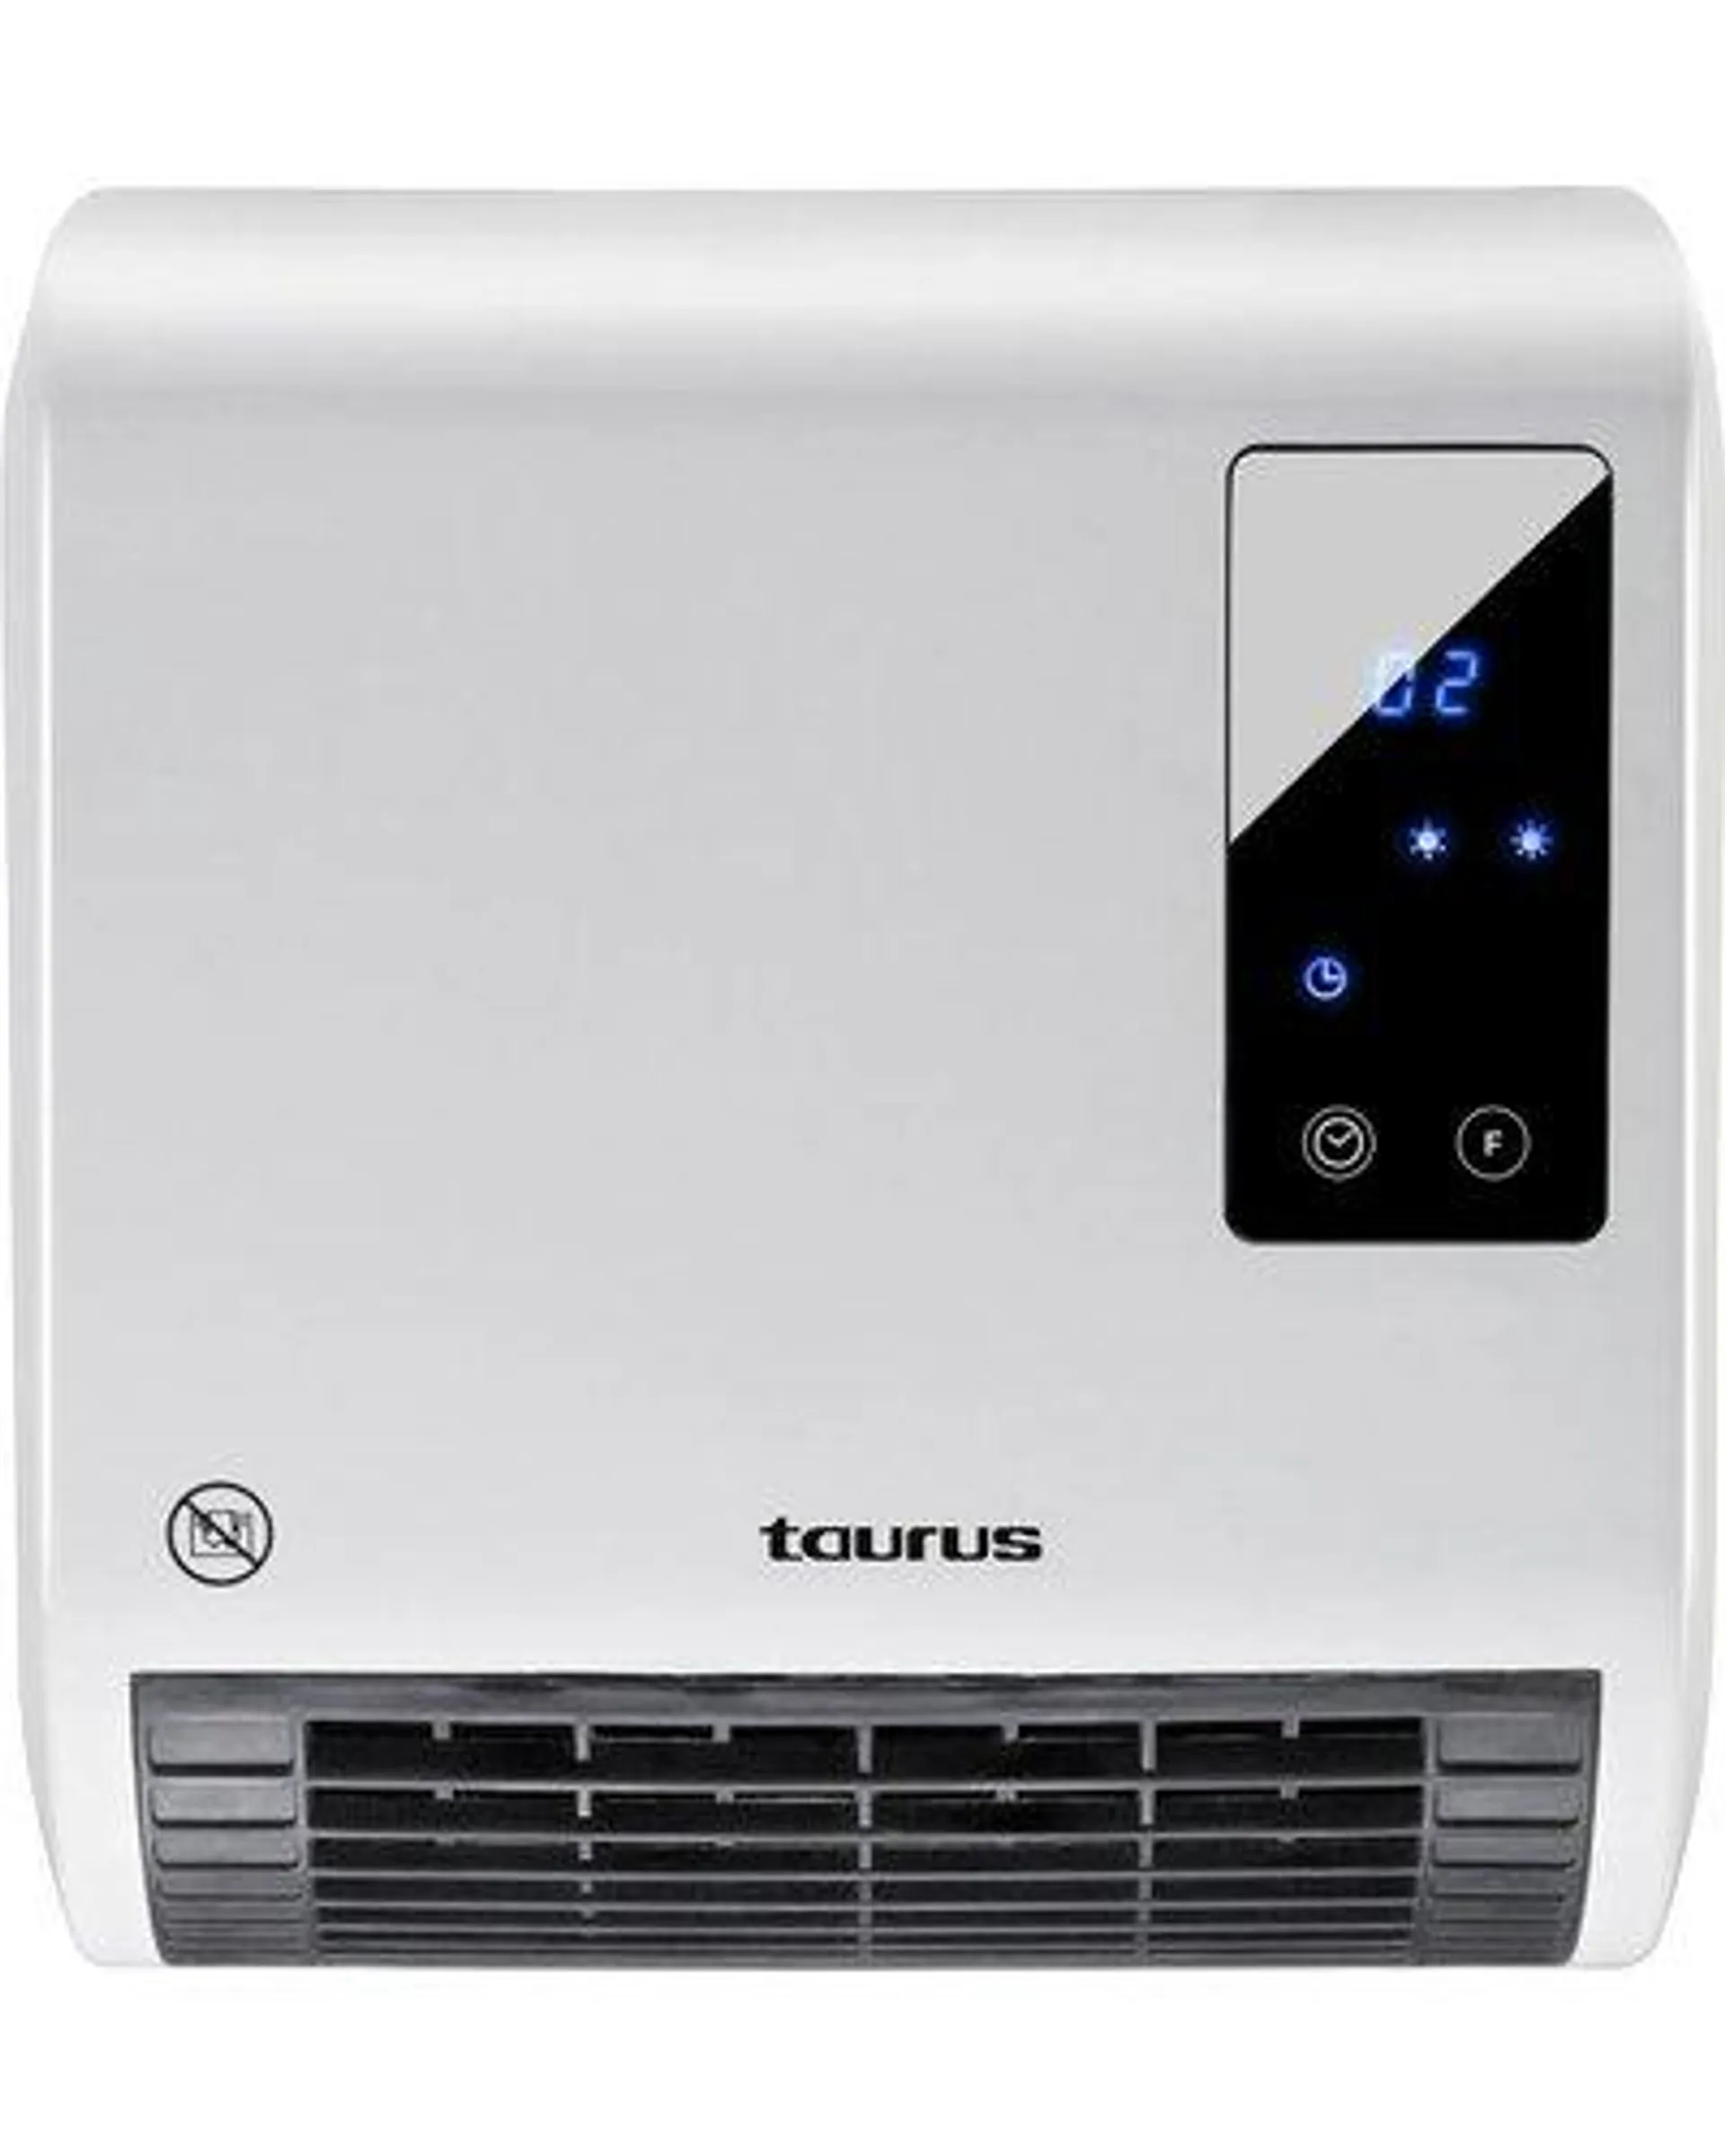 Taurus Alpatec RCMB 231 - Wall Mounted Heater with 2 Heat Settings (1000-2000W)(White)